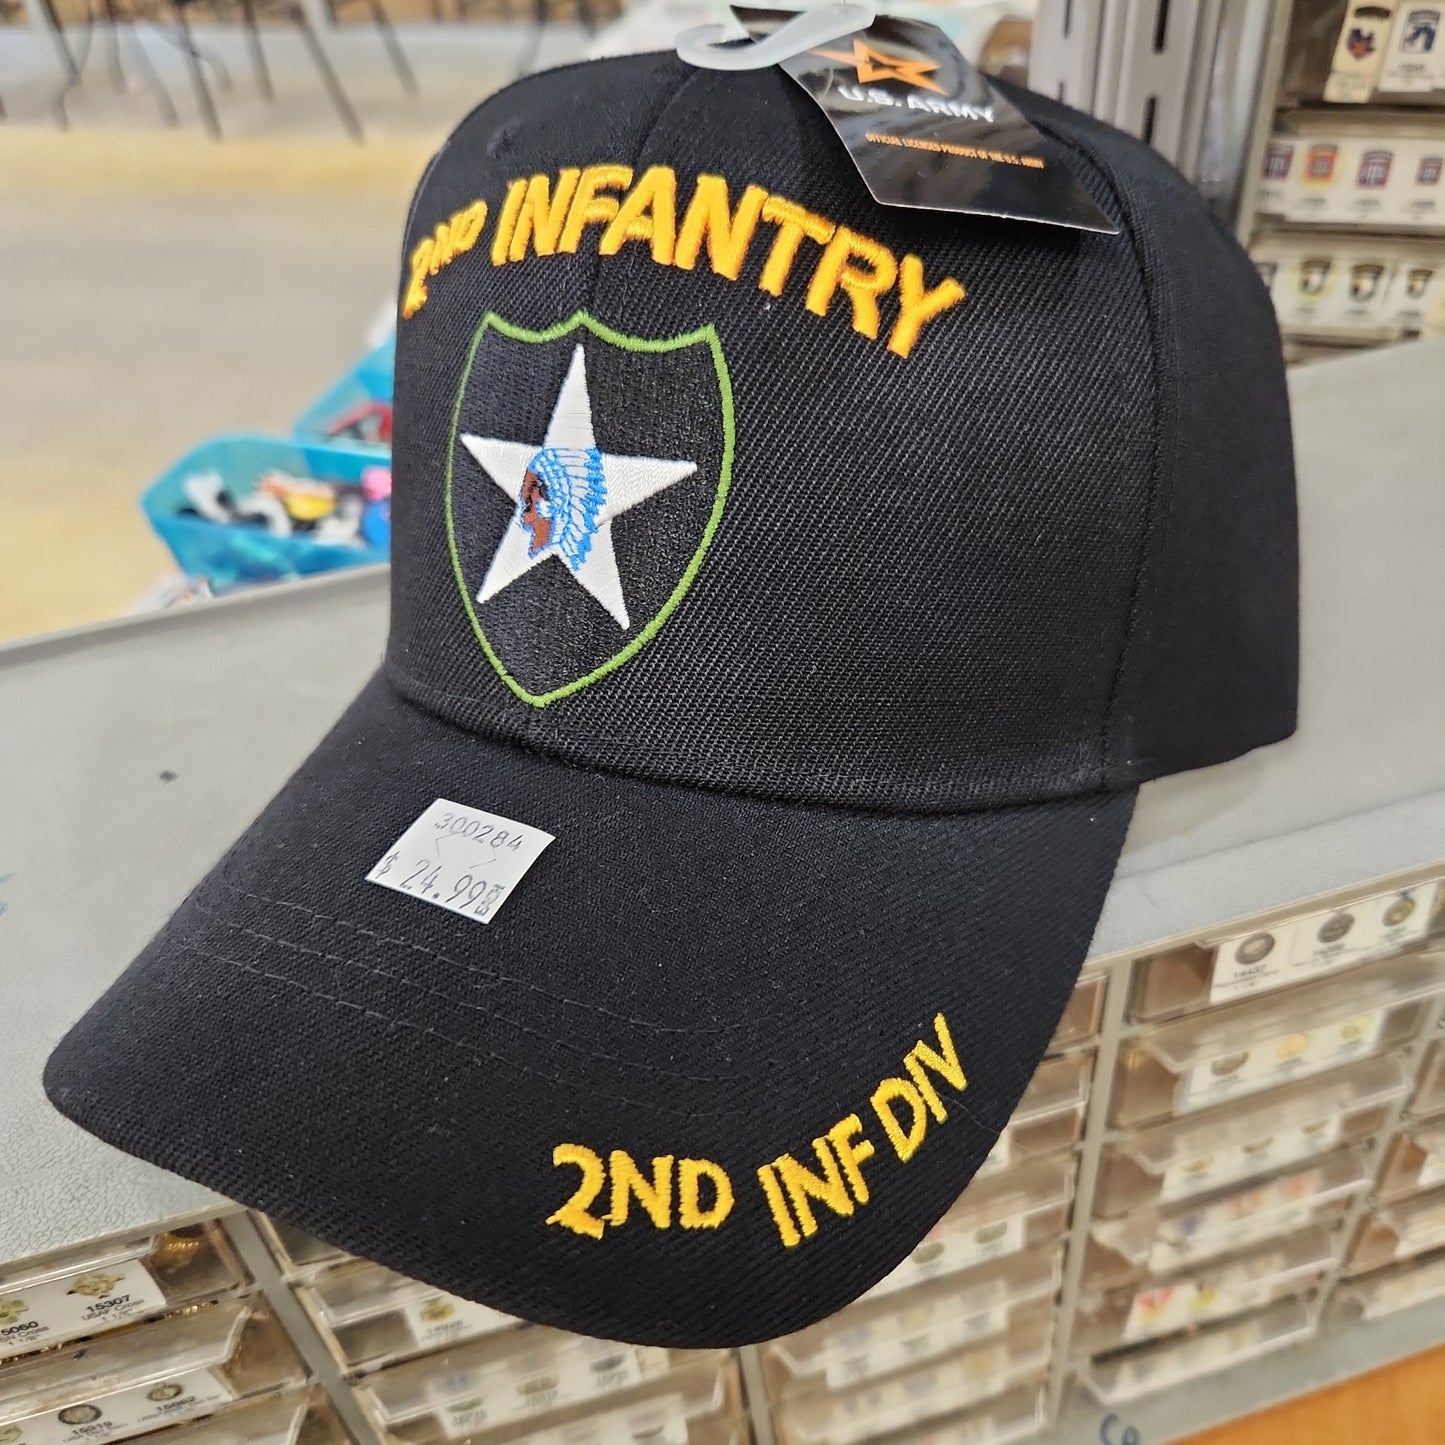 2nd infantry